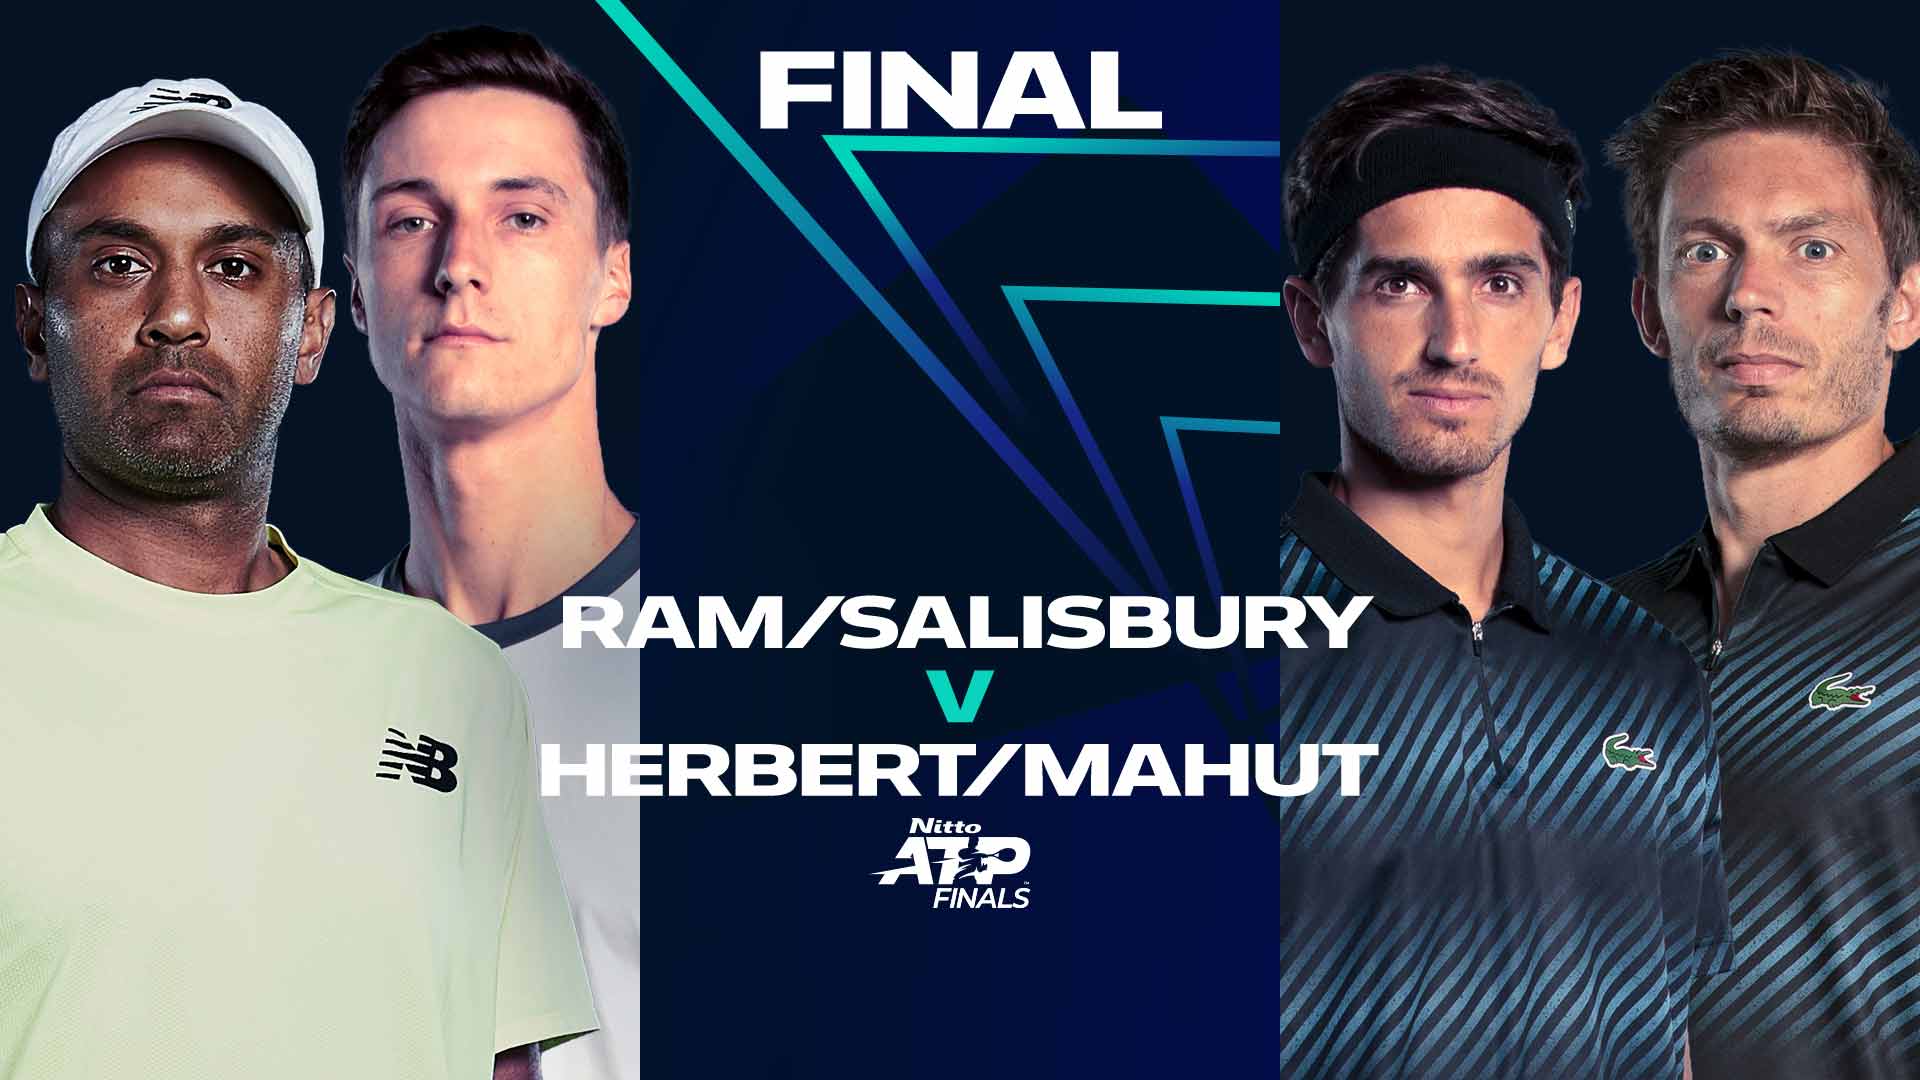 Rajeev Ram and Joe Salisbury face Pierre-Hugues Herbert and Nicolas Mahut in the final of the Nitto ATP Finals